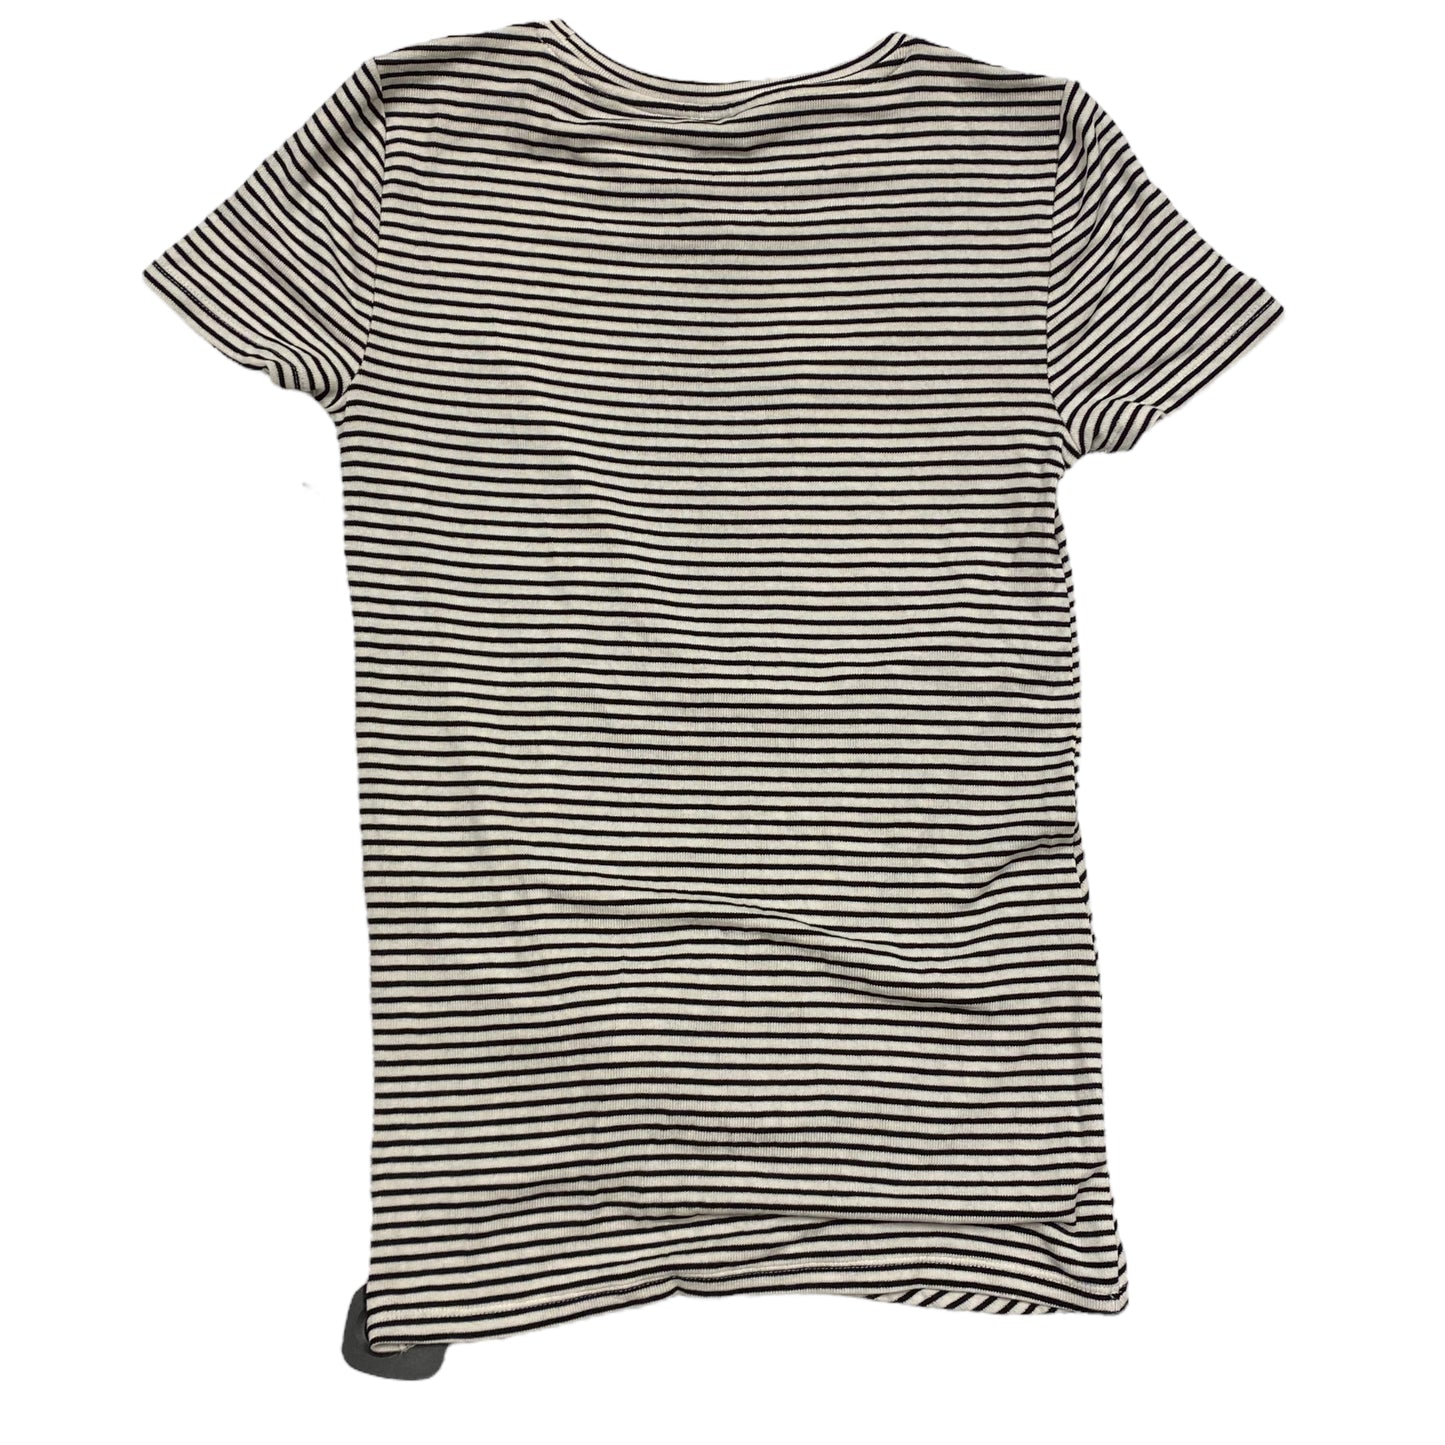 Striped Pattern Top Short Sleeve Ann Taylor, Size Xs